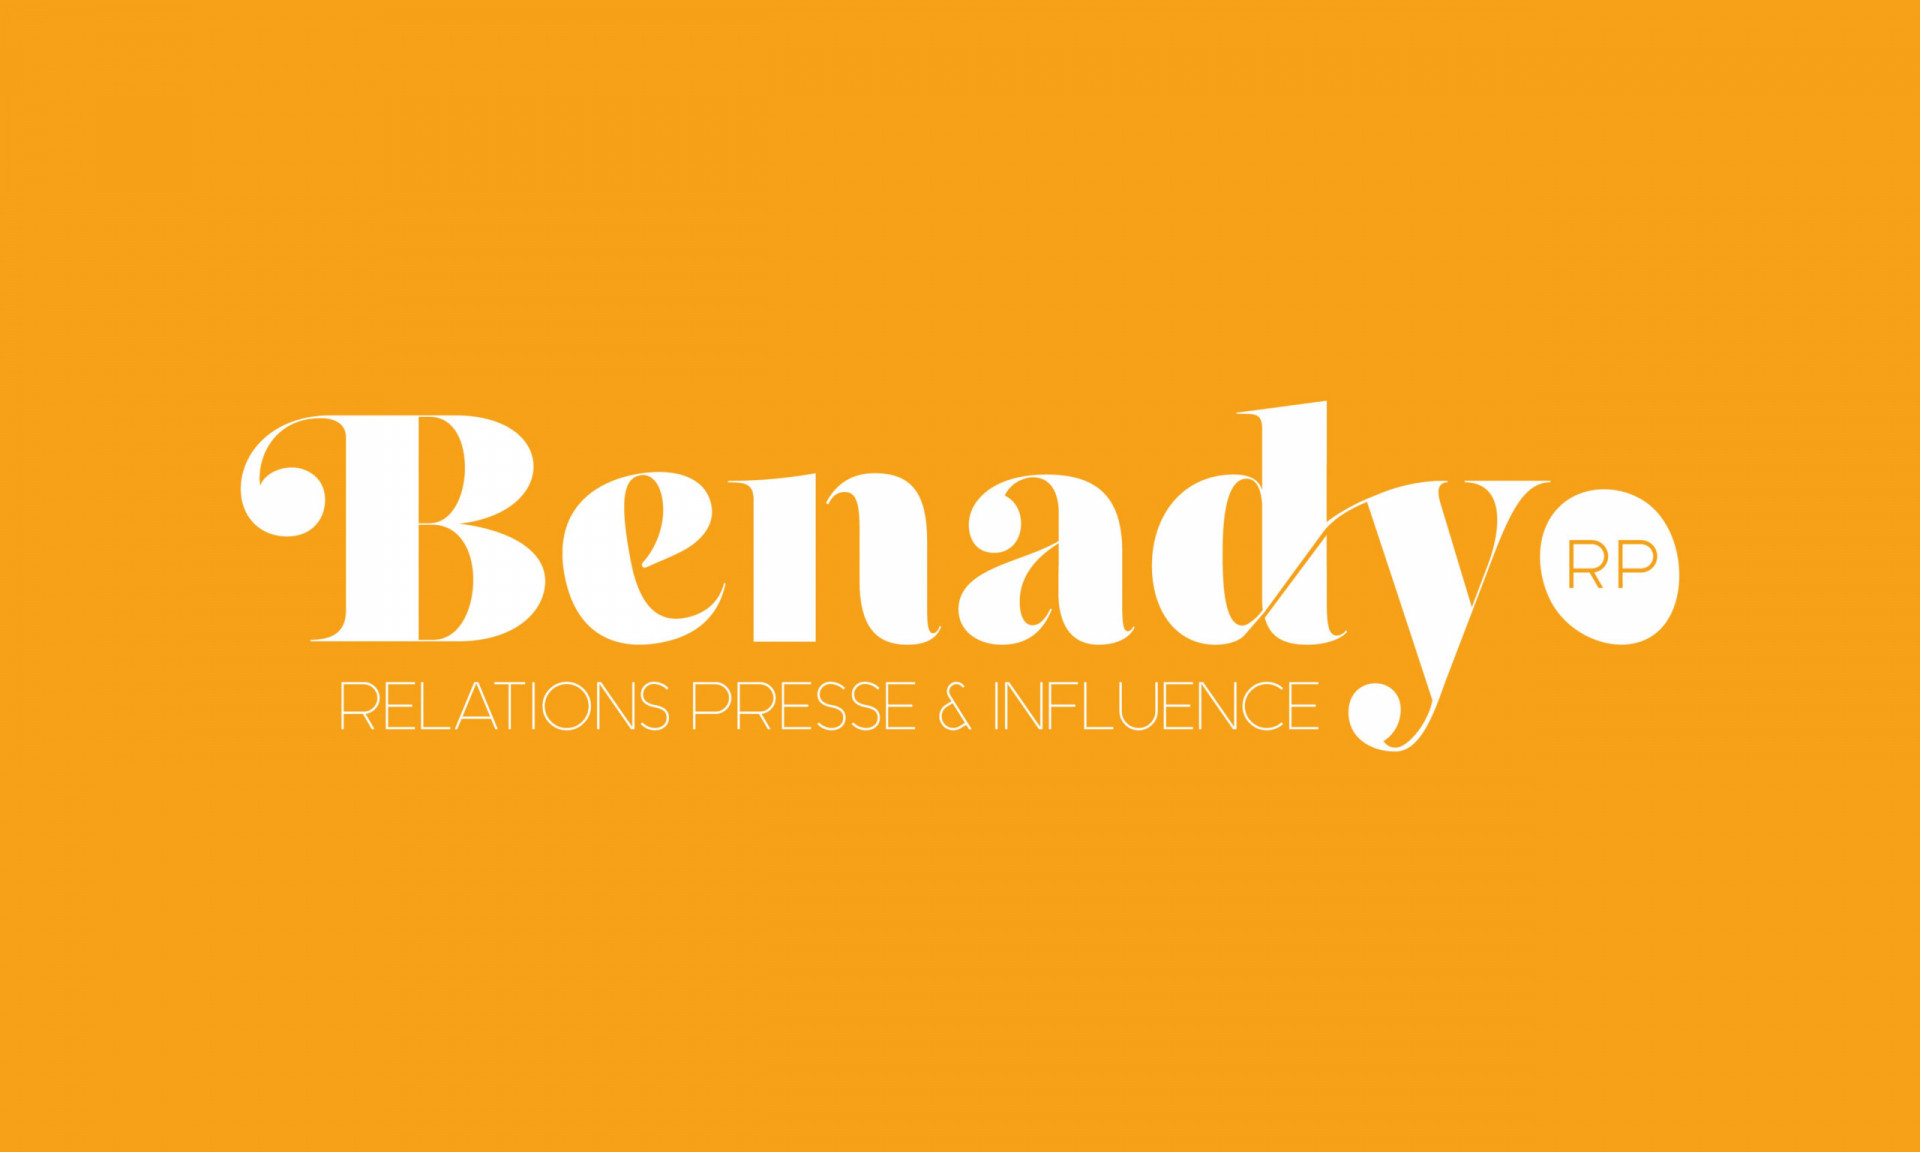 Logo Benadyrp agence de communication création logo, supports et site vitrine